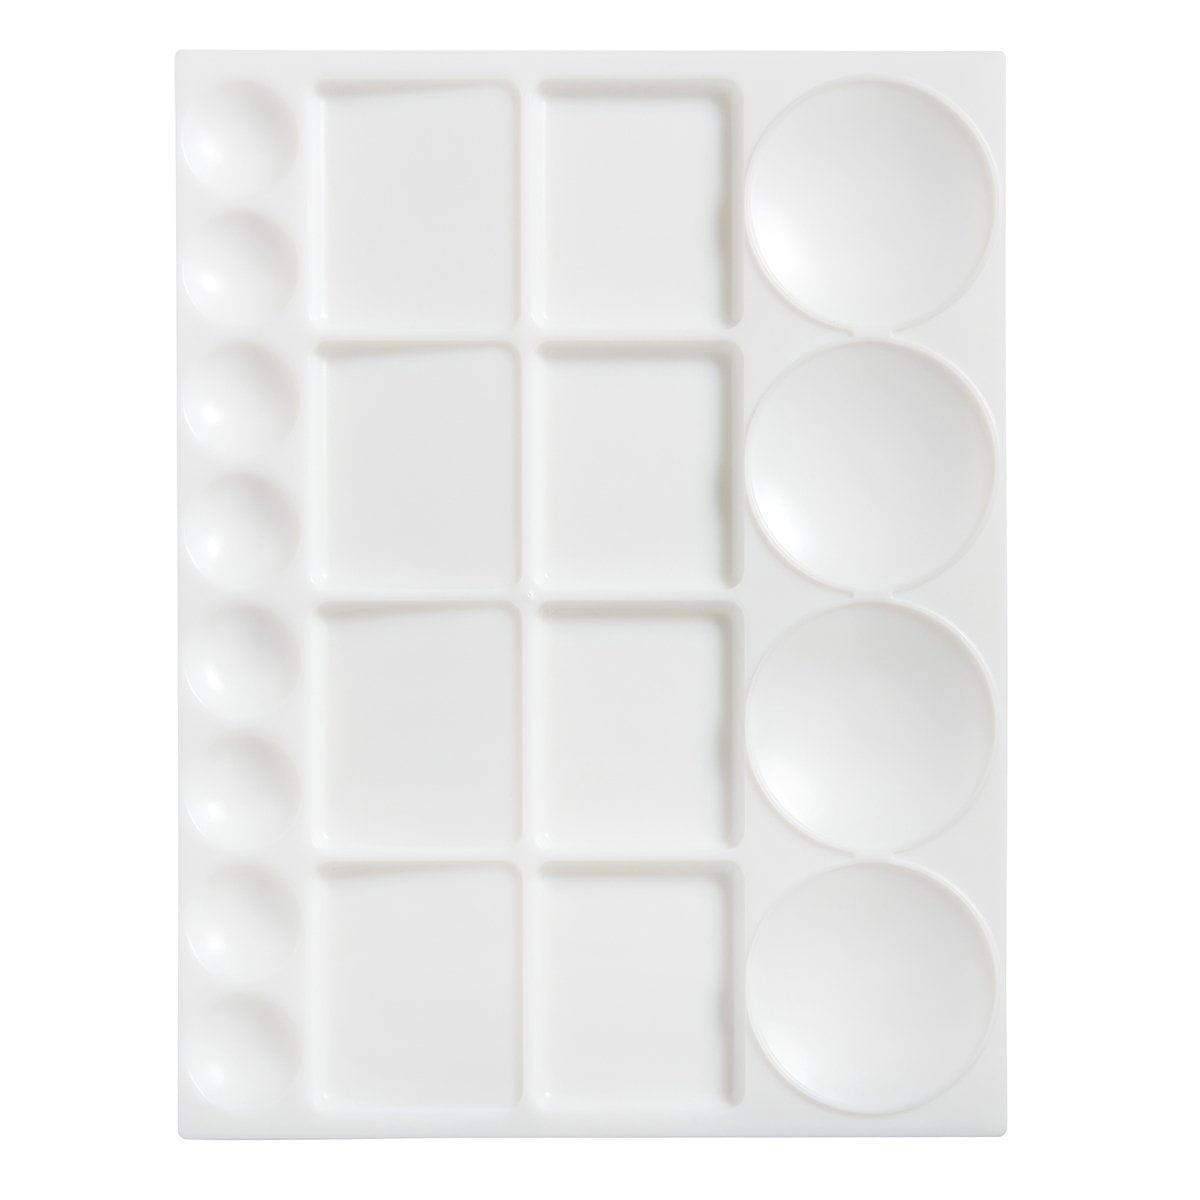 AOOKMIYA 50 Pack White Art Paint Tray Palette 6 Wells Rectangular Plas